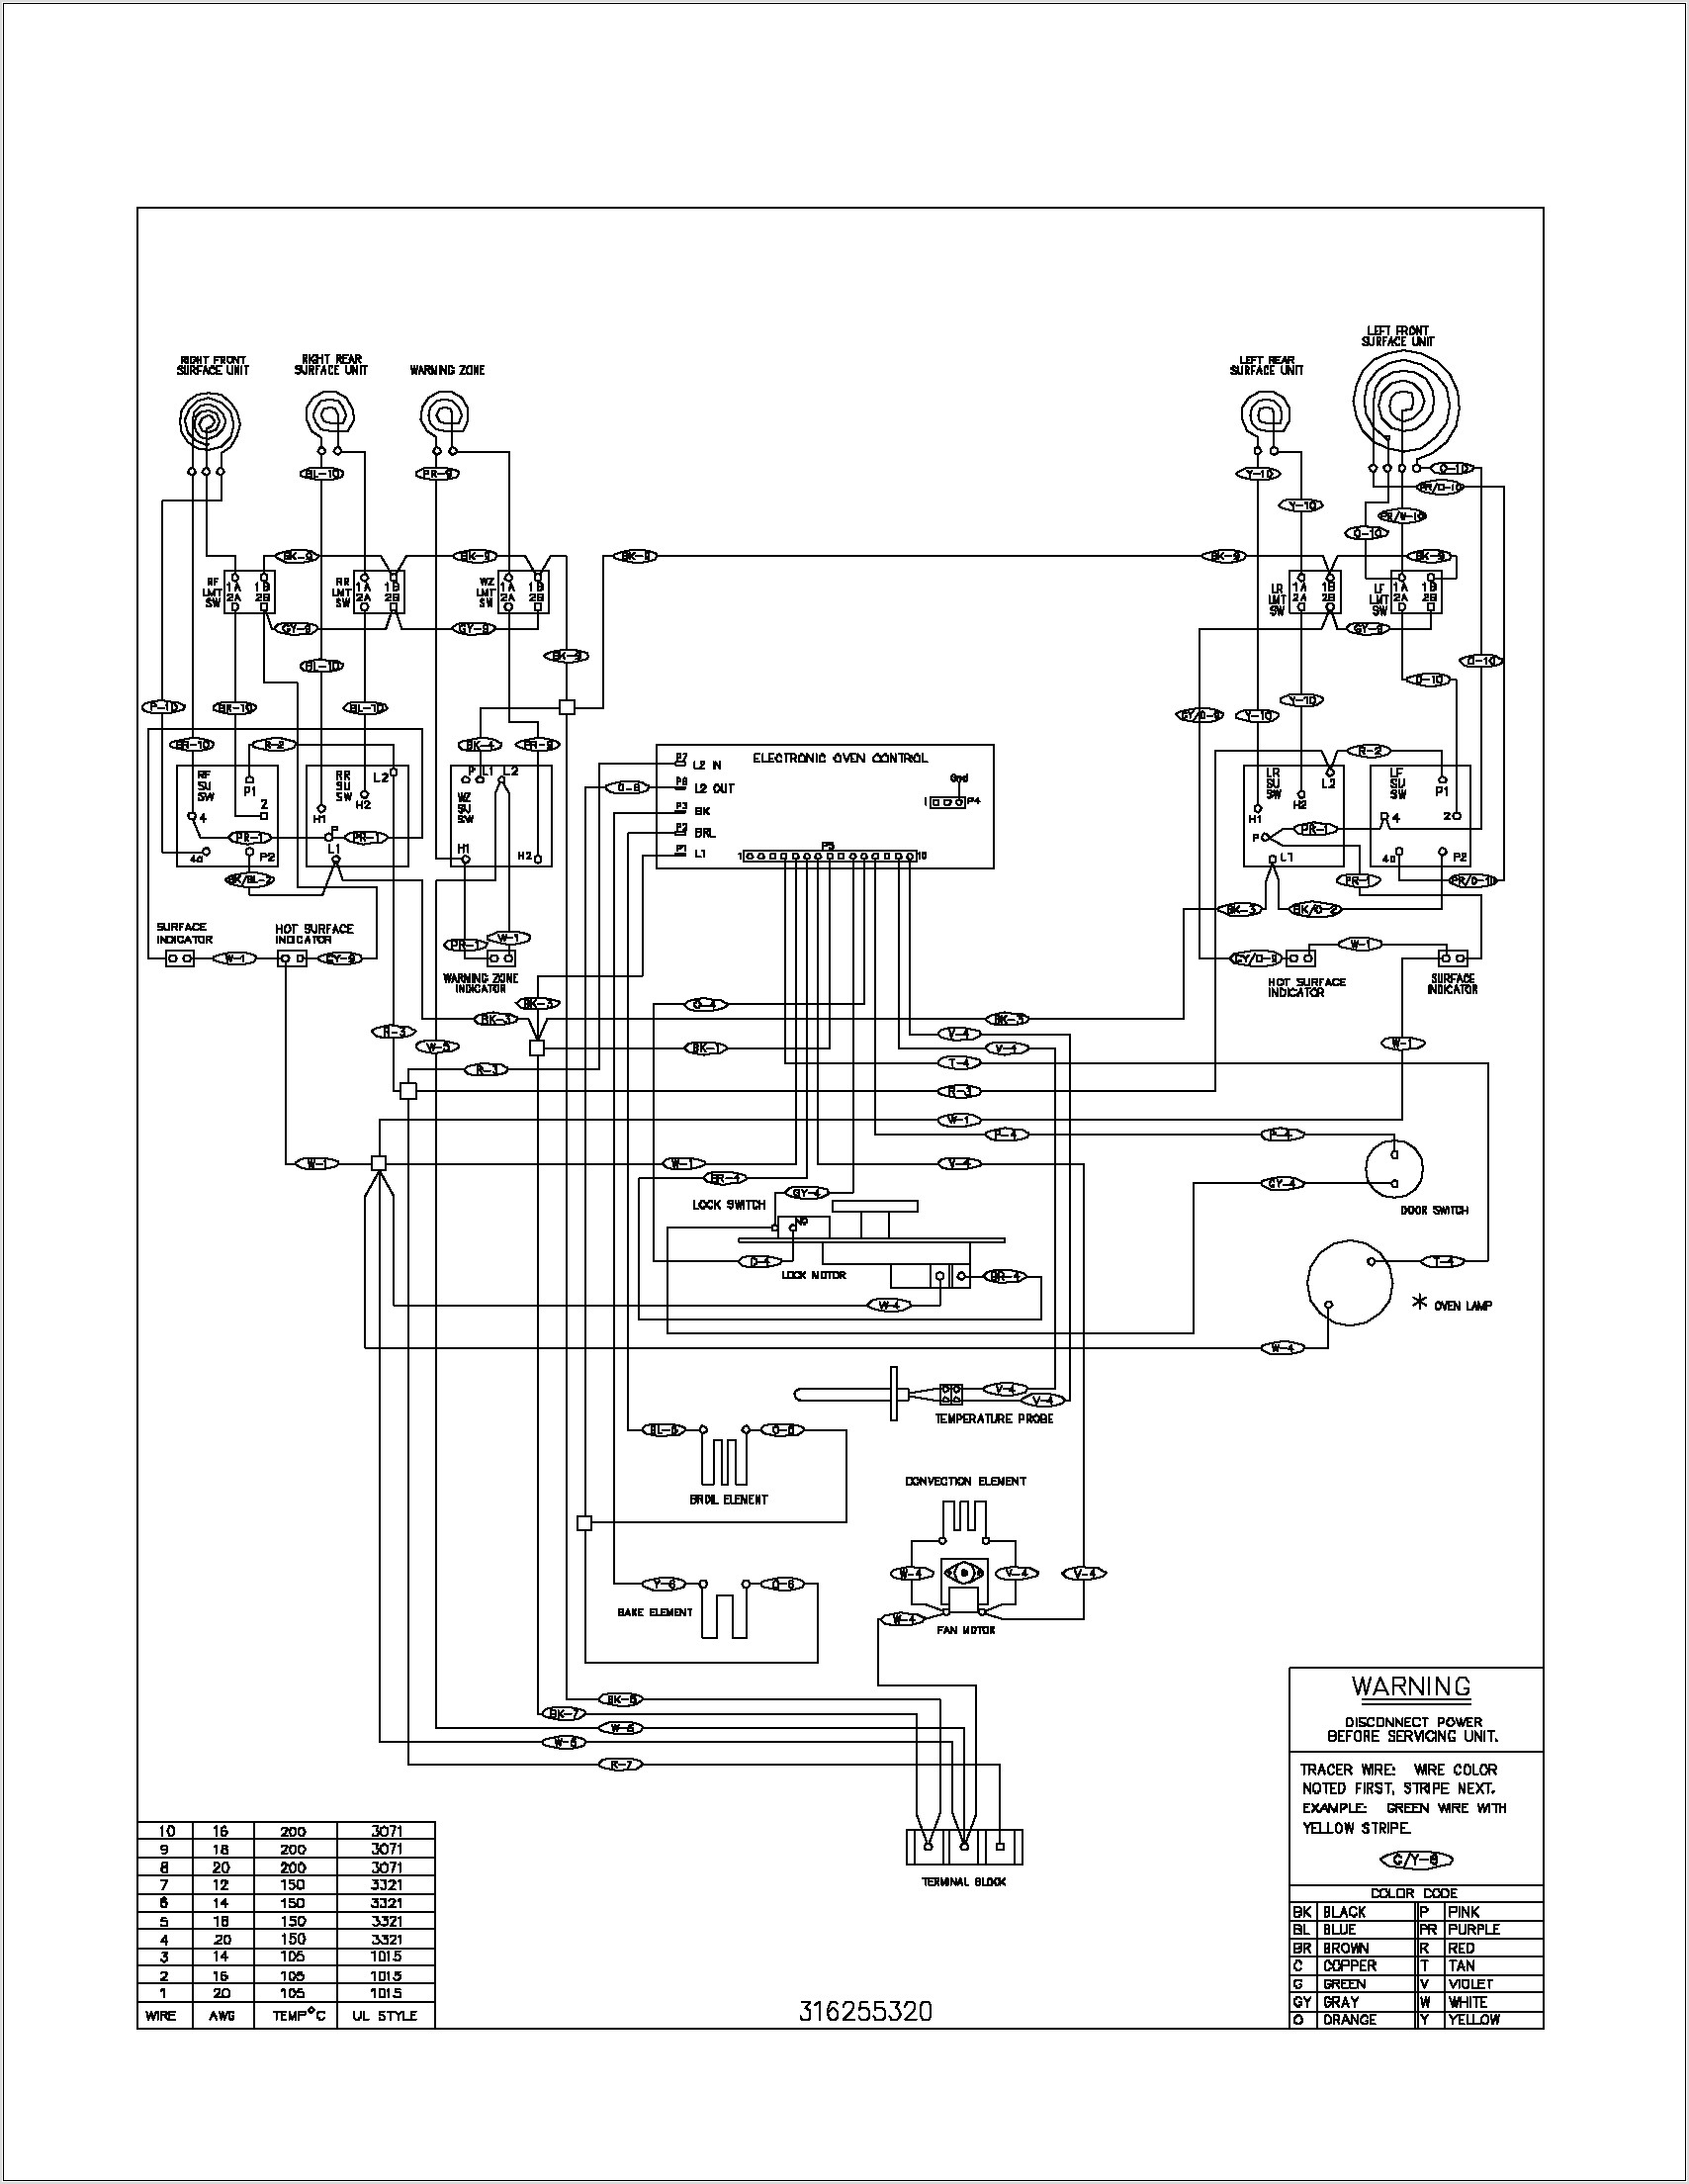 Hobart M802 Wiring Diagram